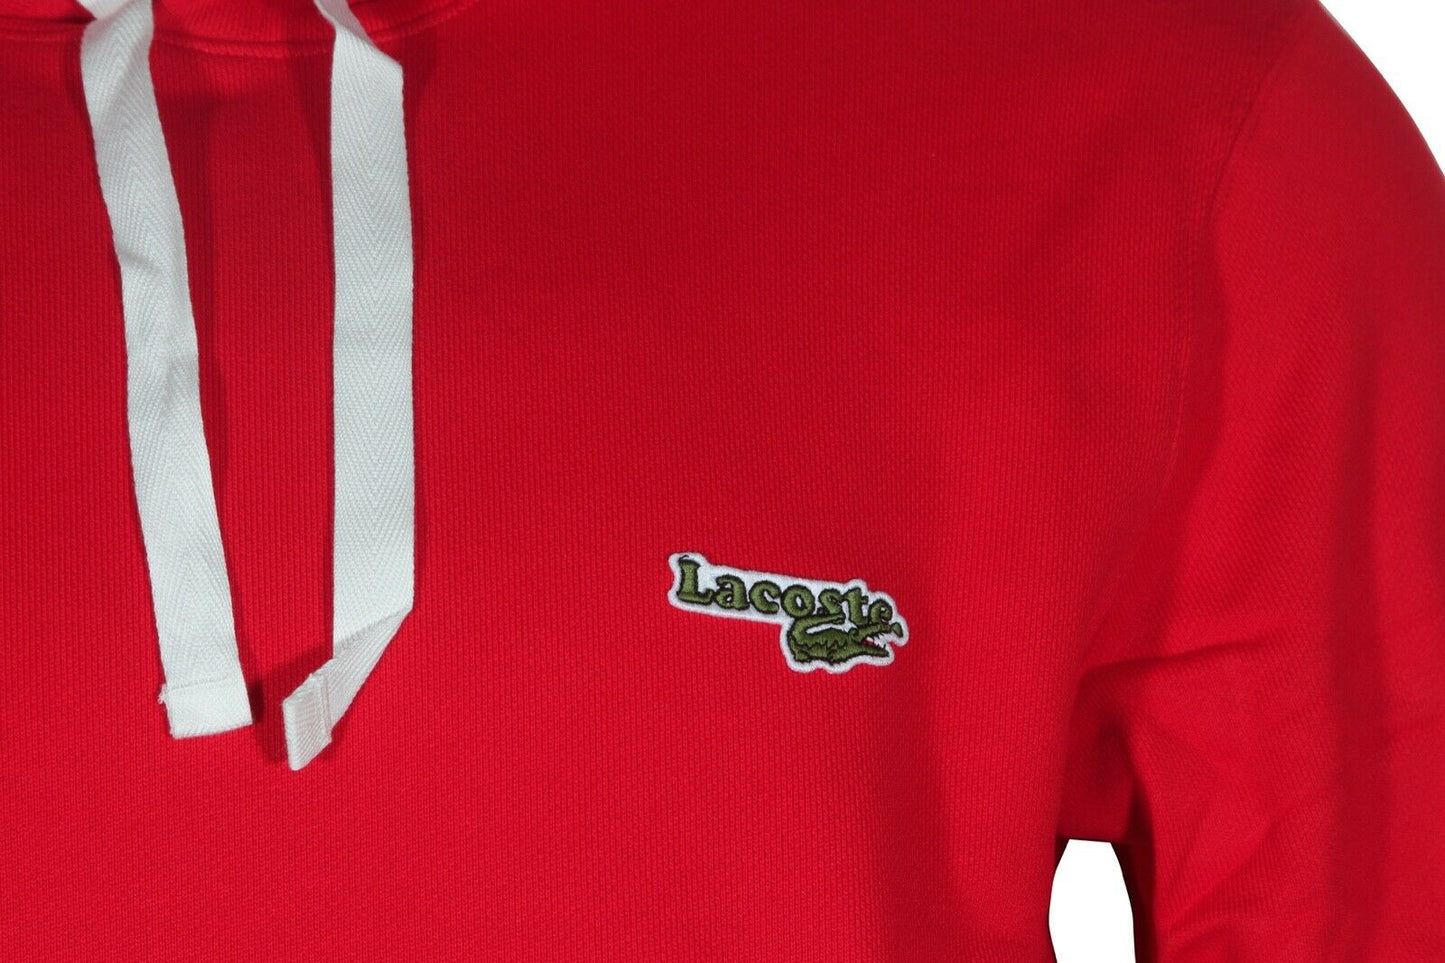 Lacoste Men's Hooded Fleece Sweatshirt in Red SH2162-51 240